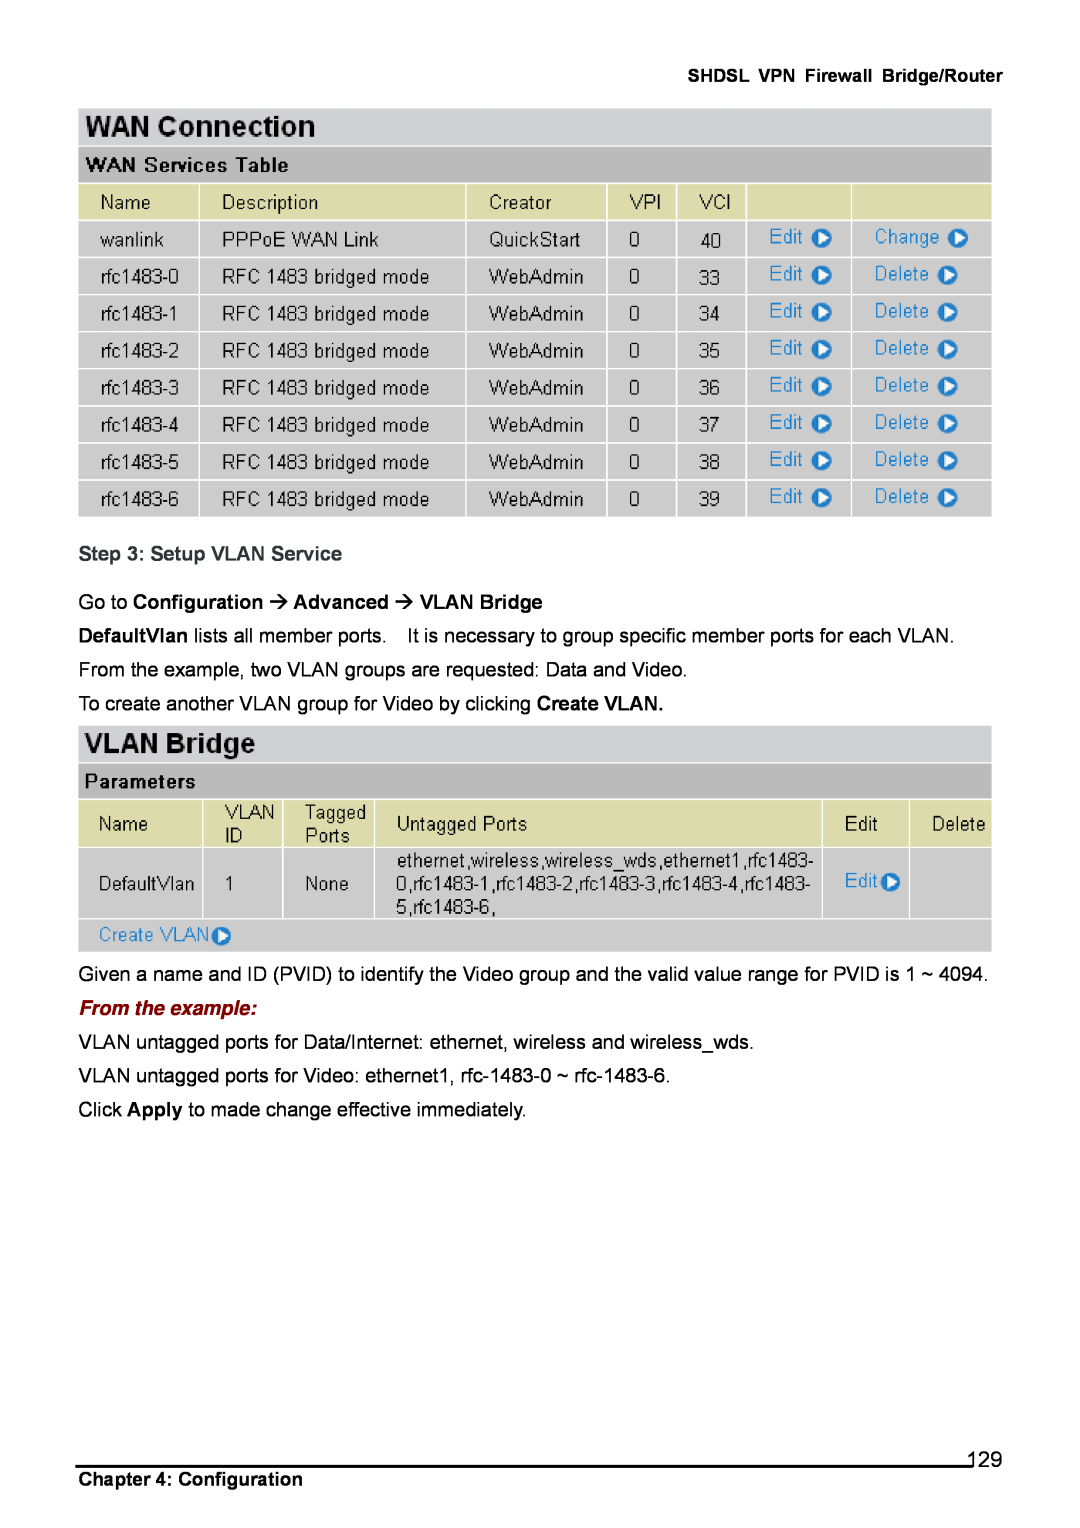 Billion Electric Company 8501 user manual Setup VLAN Service, Go to Configuration Advanced VLAN Bridge, From the example 